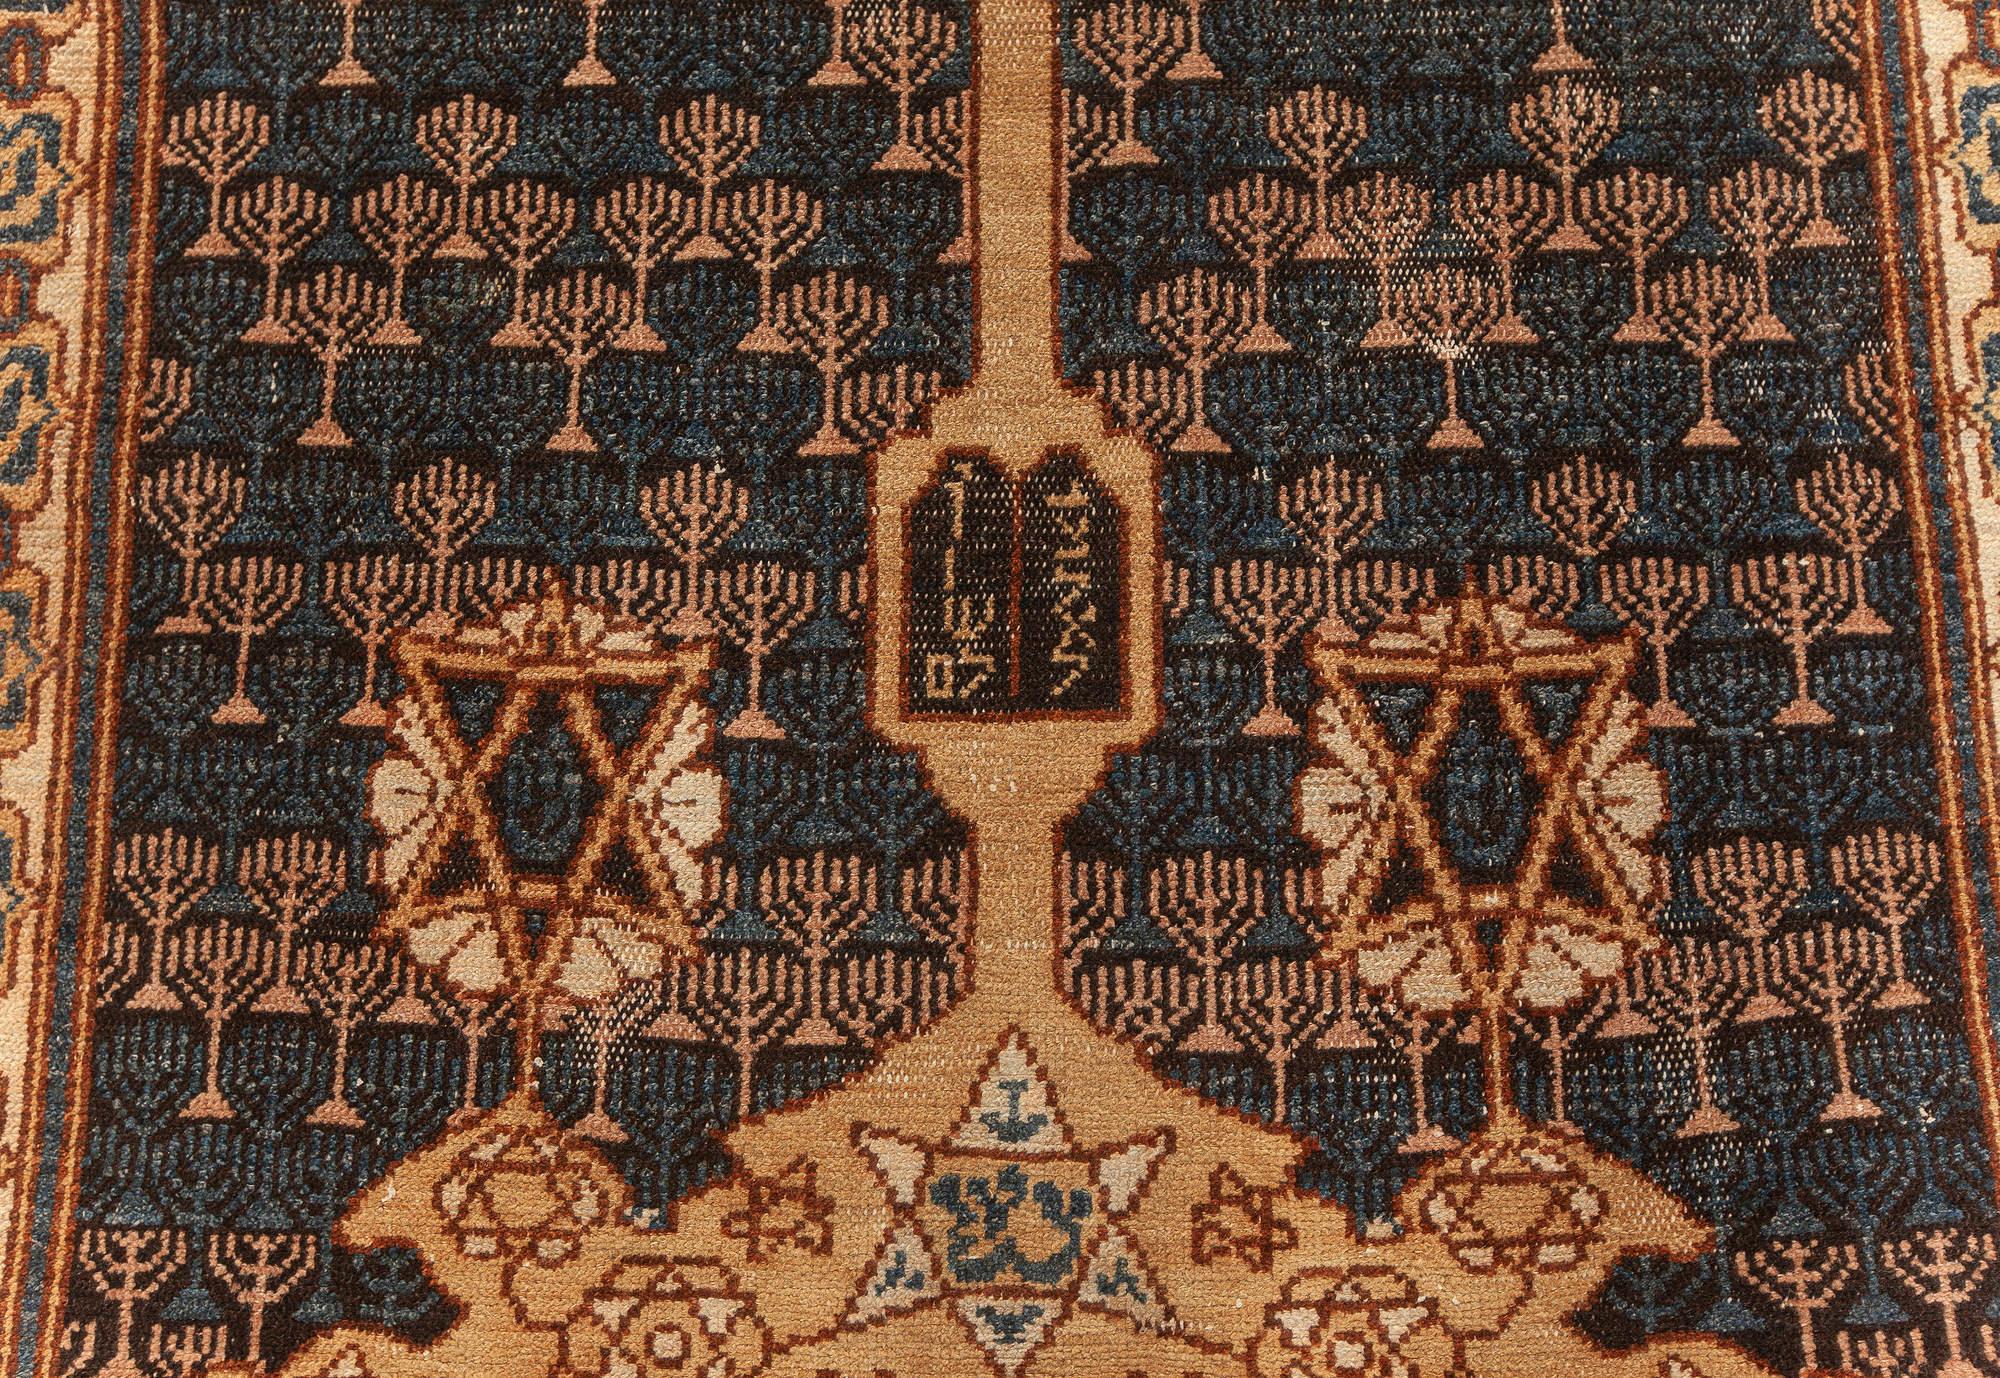 One-of-a-kind Antique Bezalel rug by Doris Leslie Blau
Size: 3'3